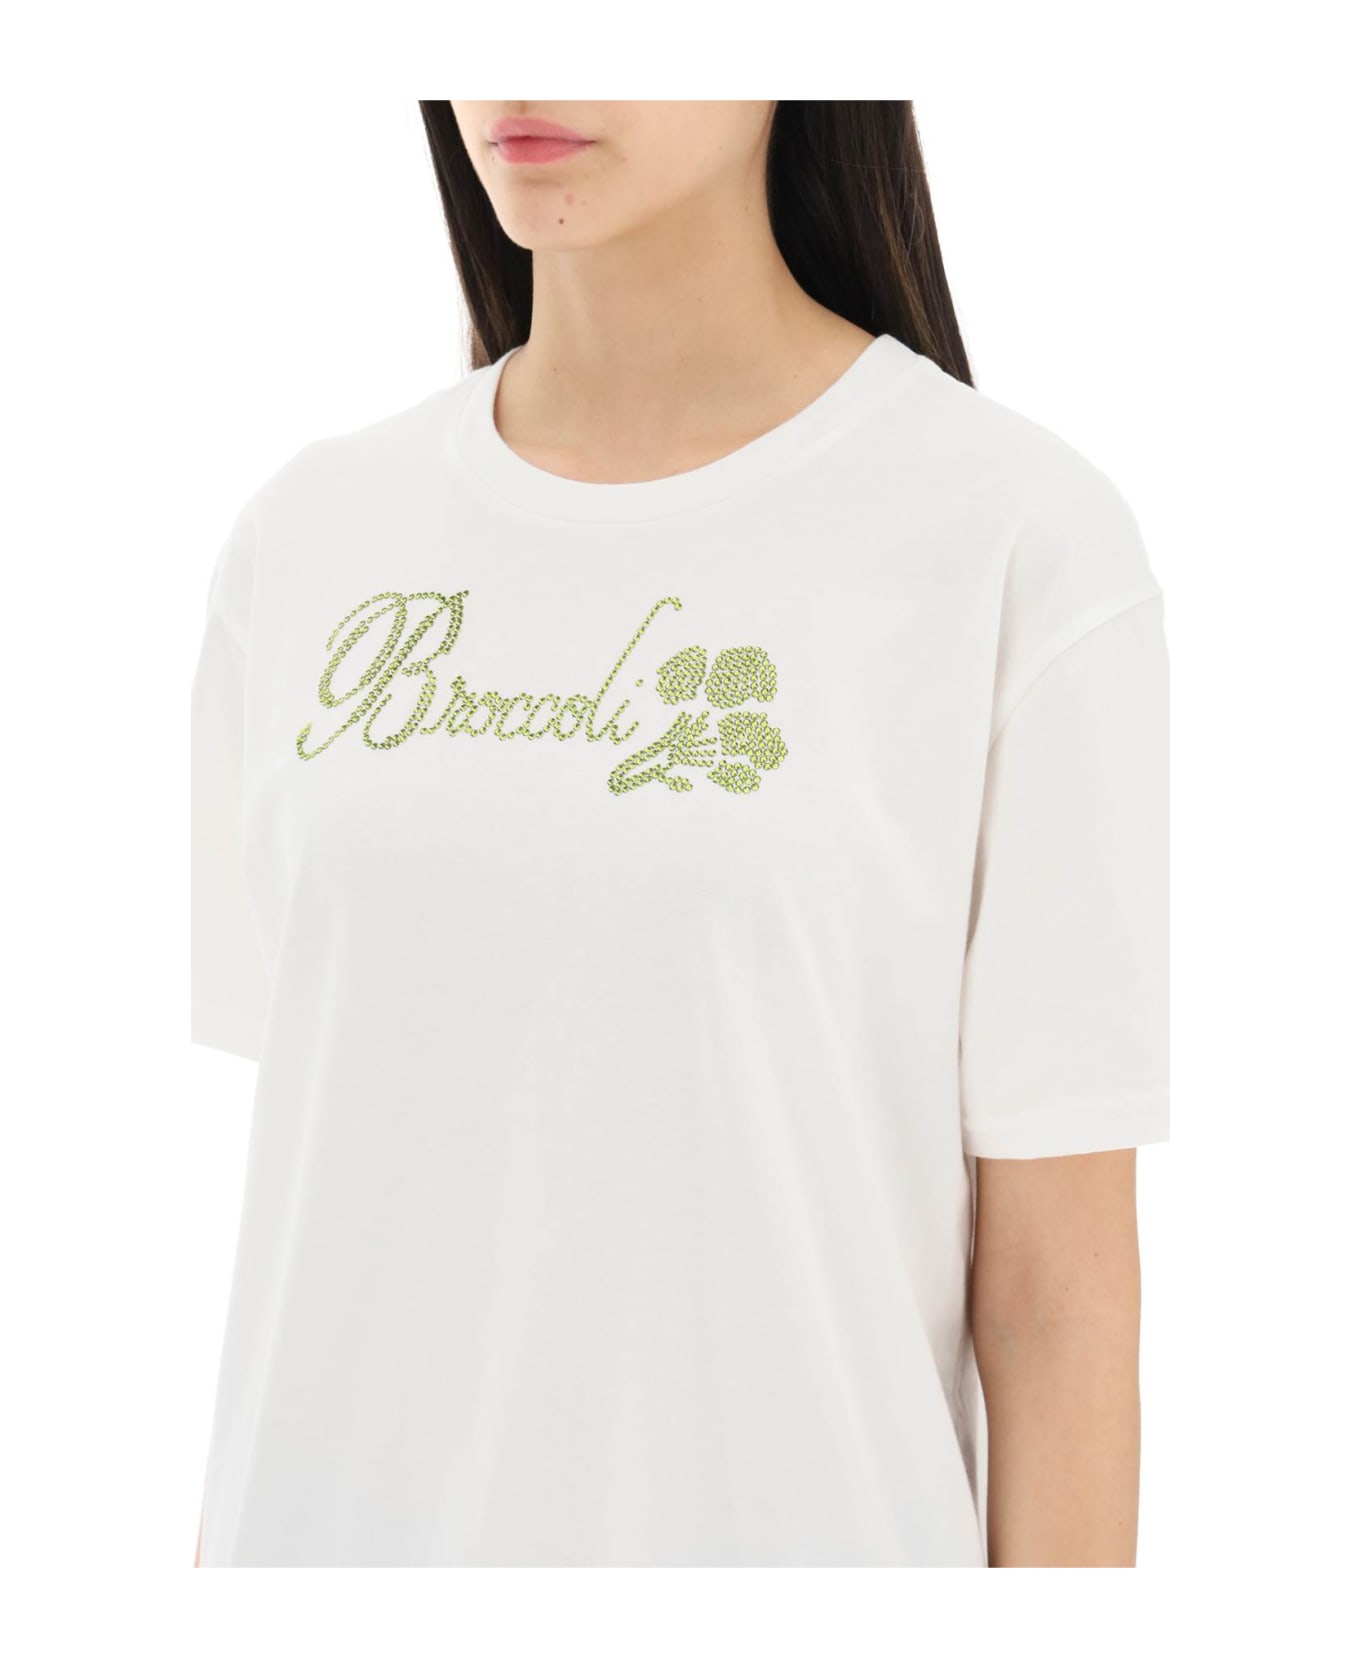 Collina Strada Organic Cotton T-shirt With Rhinestones - BROCCOLI (White)